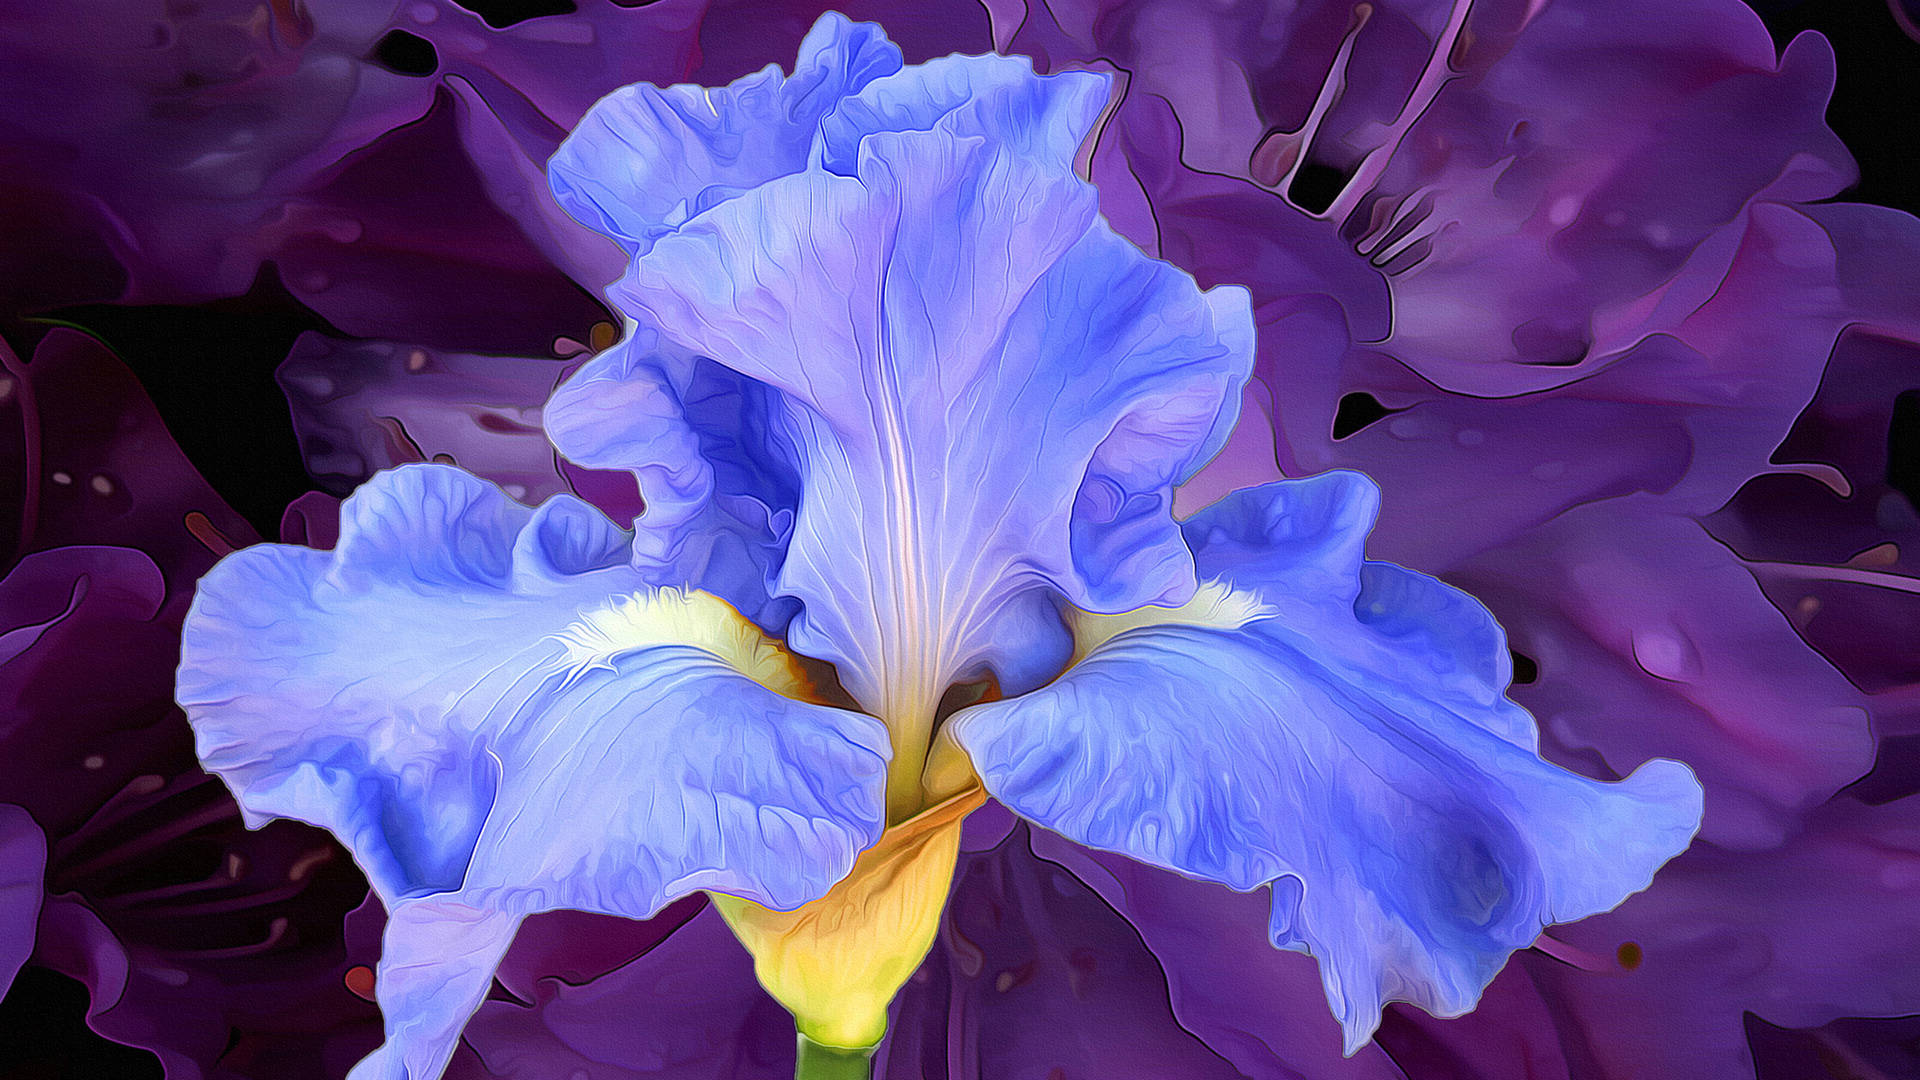 Hyper Realistic Purple Iris Flower Painting Background